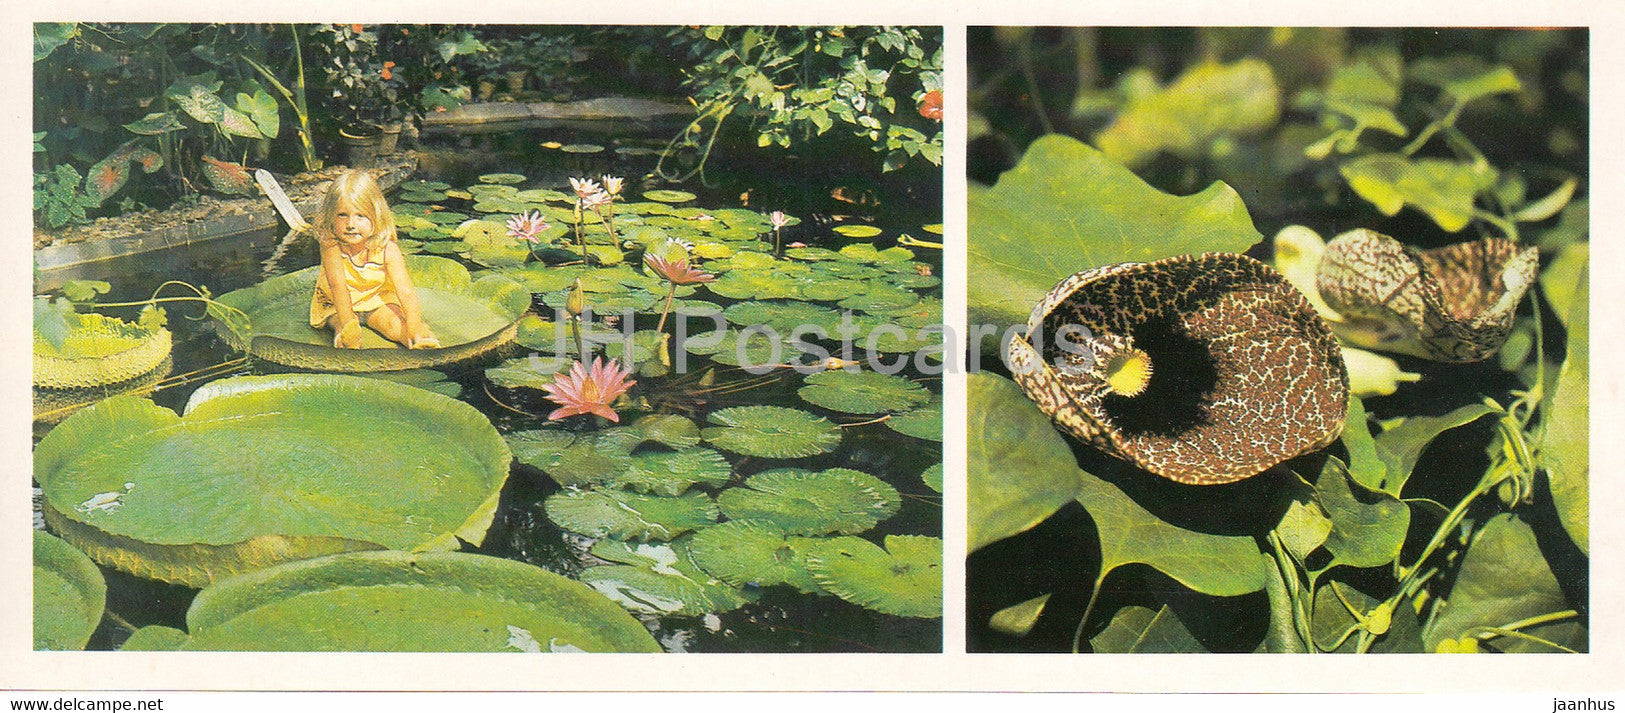 Victoria cruziana - water lily - calico flower - Siberian Botanical Garden - 1985 - Russia USSR - unused - JH Postcards